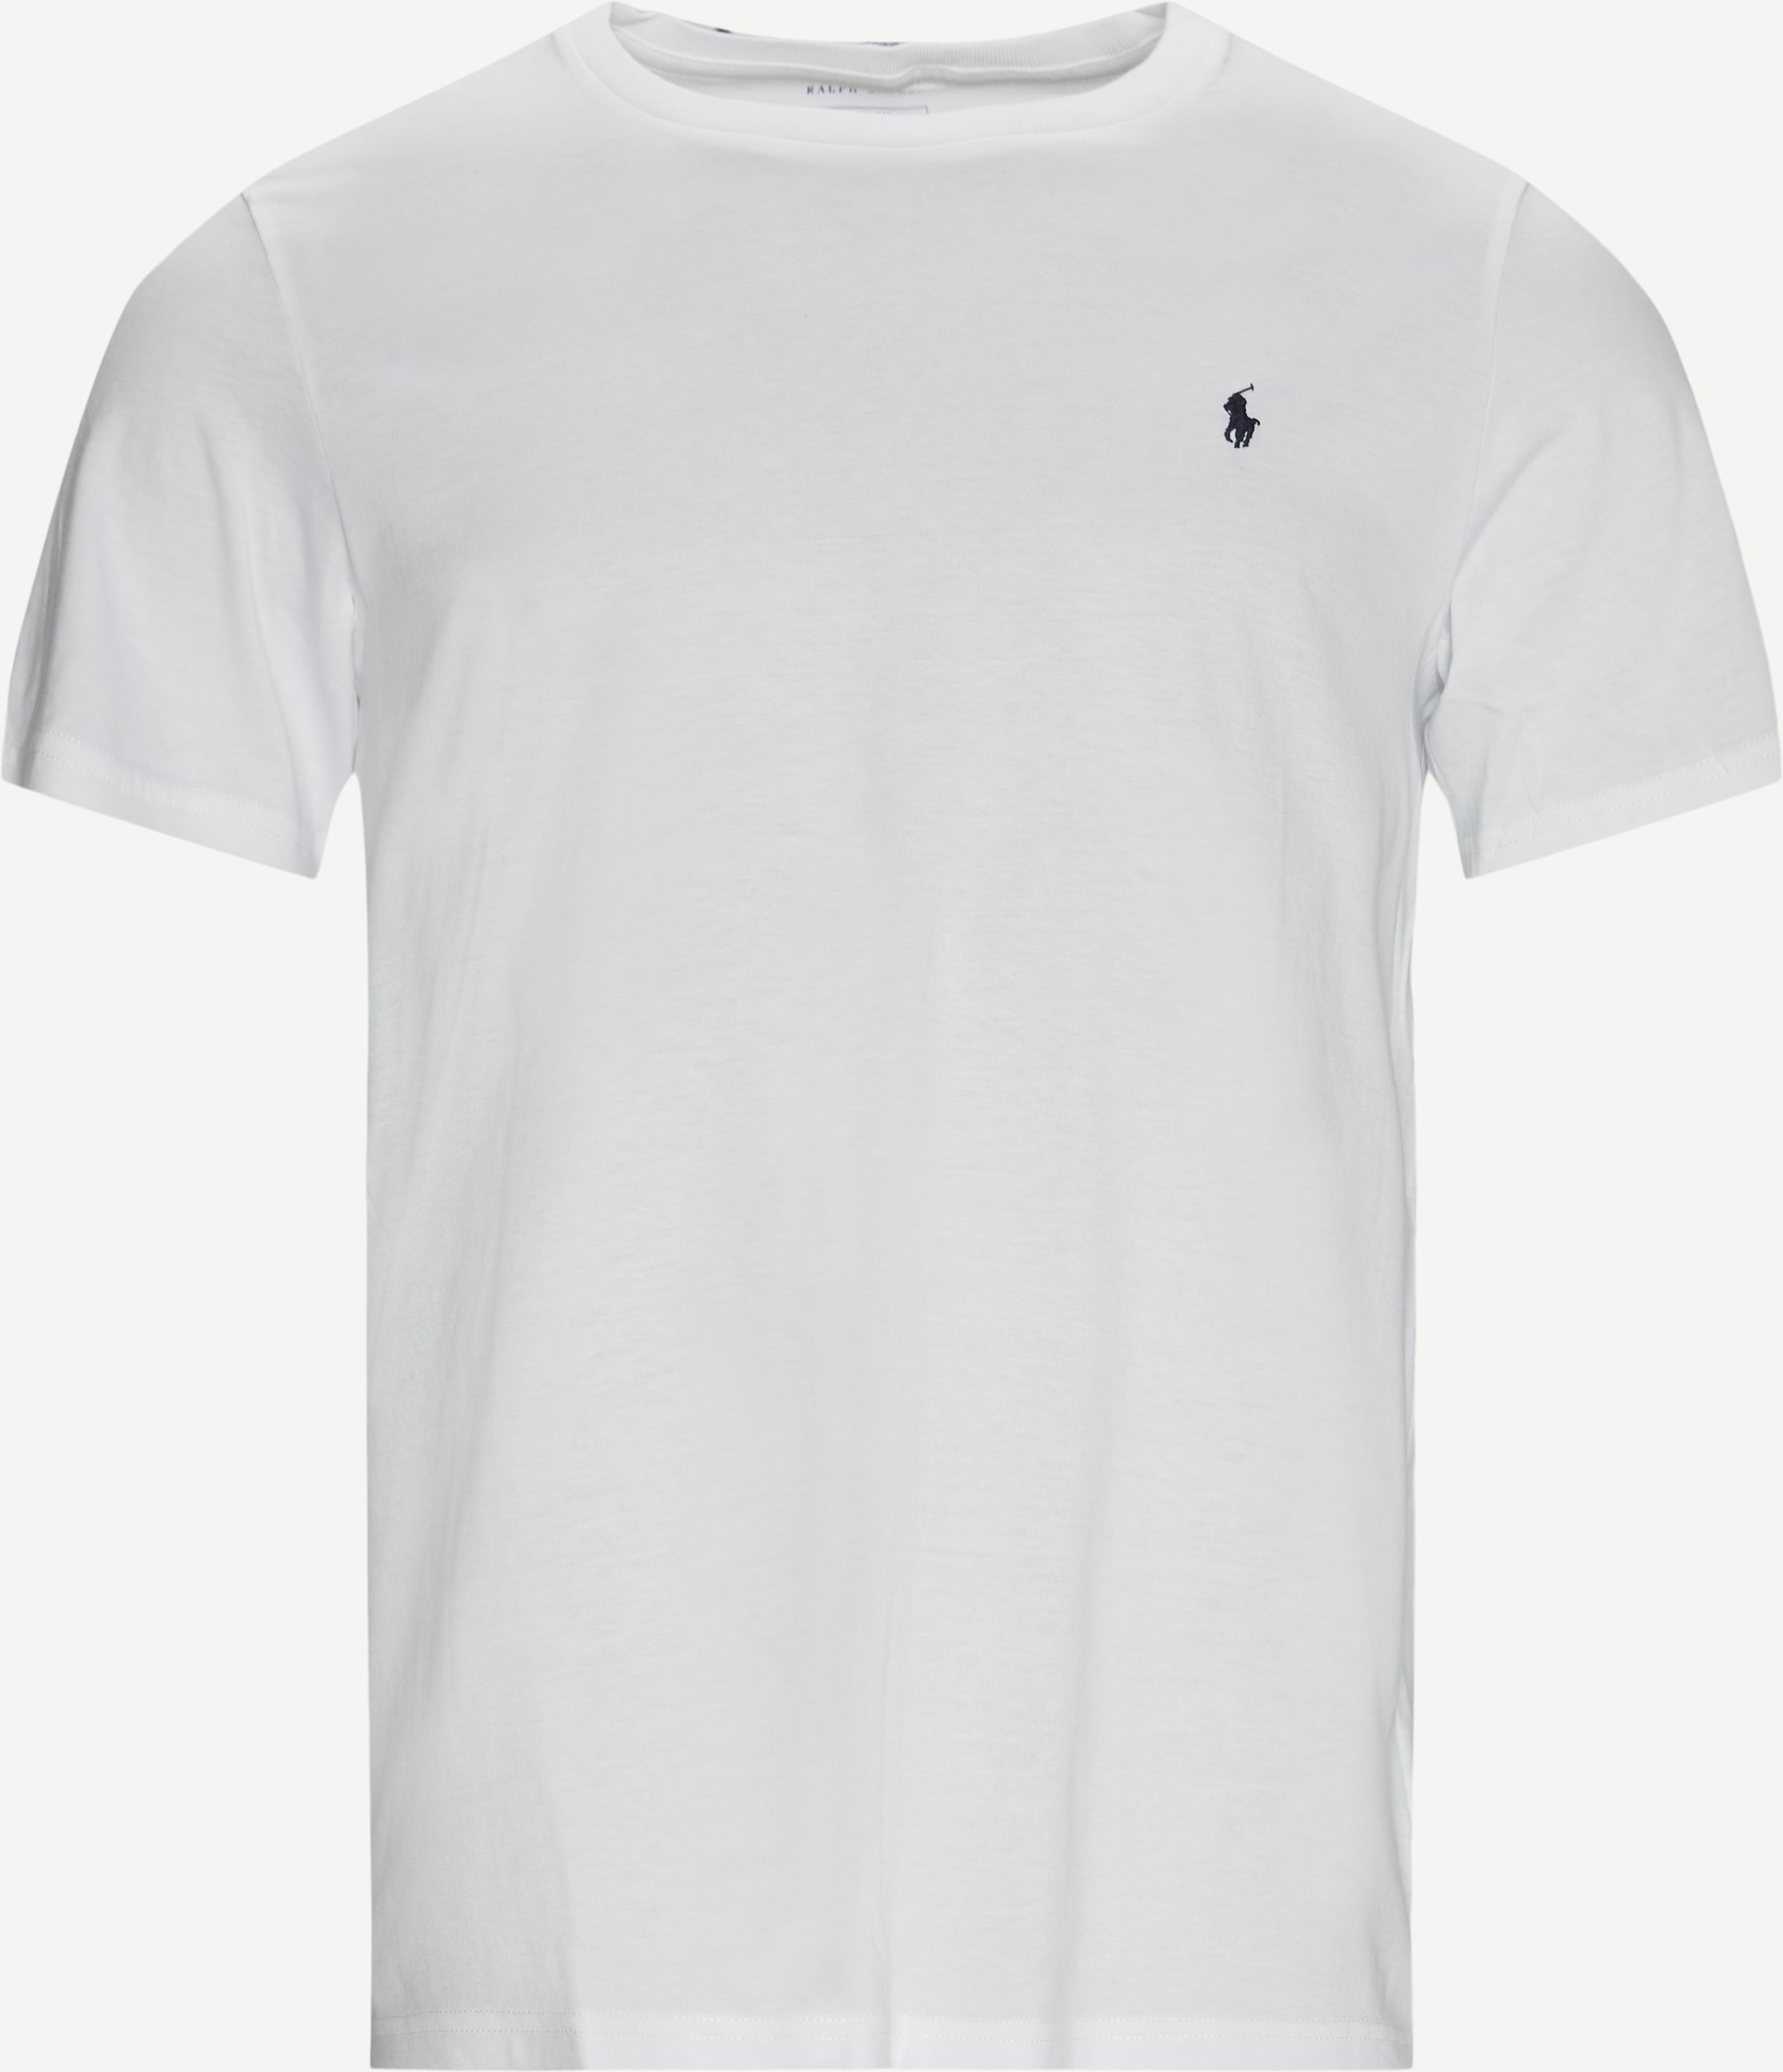 Polo Ralph Lauren T-shirts 714844756. Vit